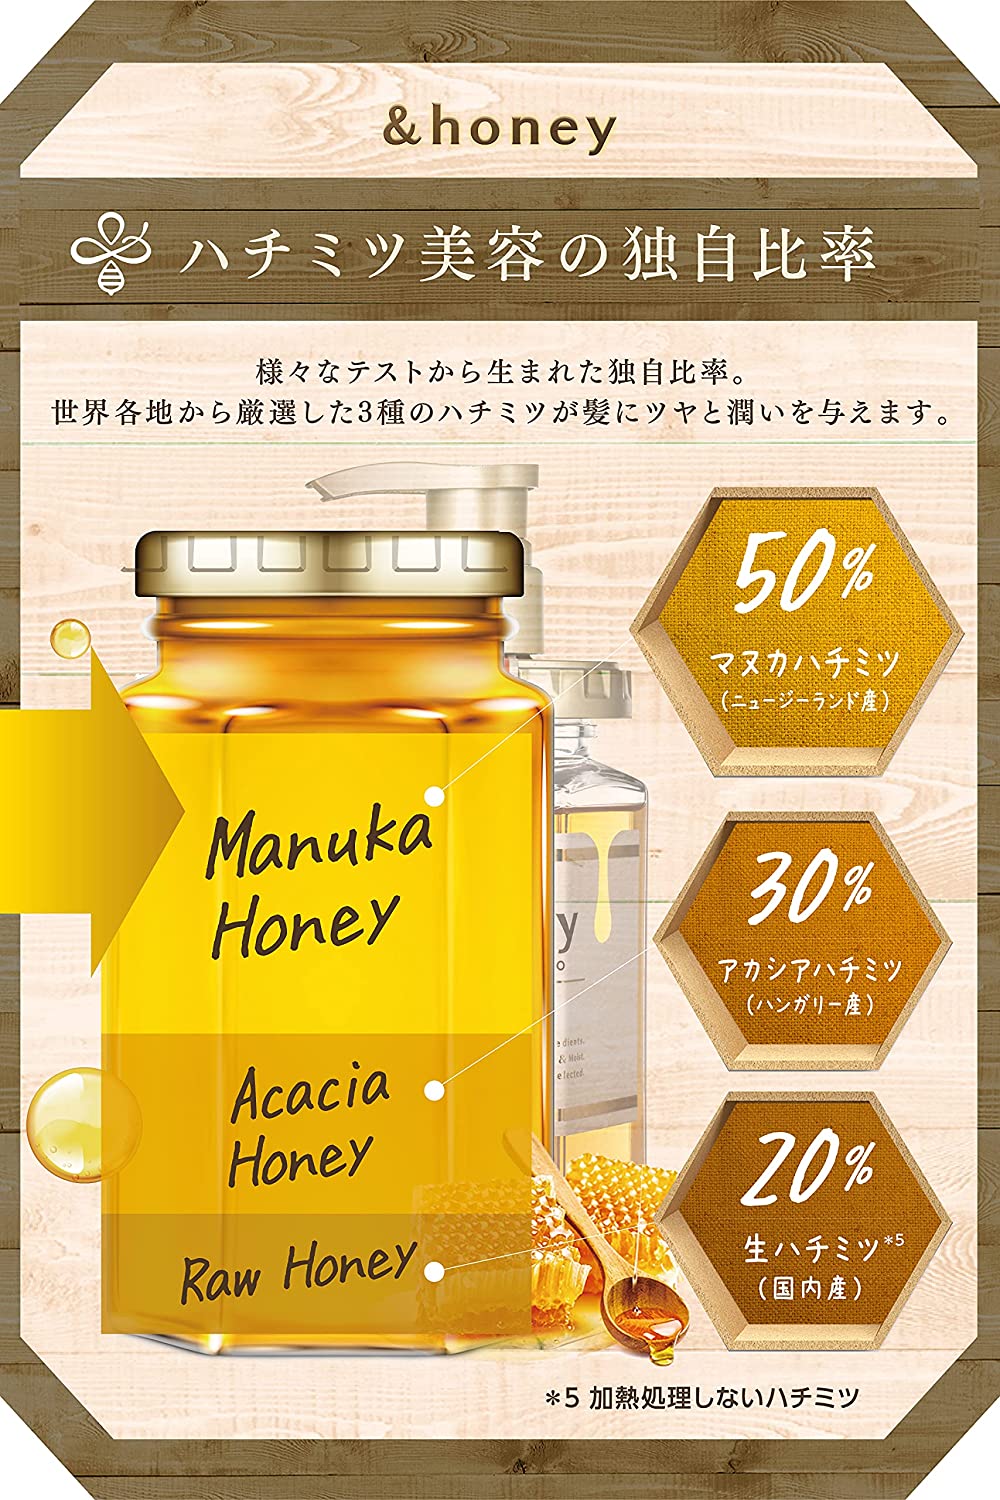 &Honey Deep Moist Shampoo 1.0 440ml